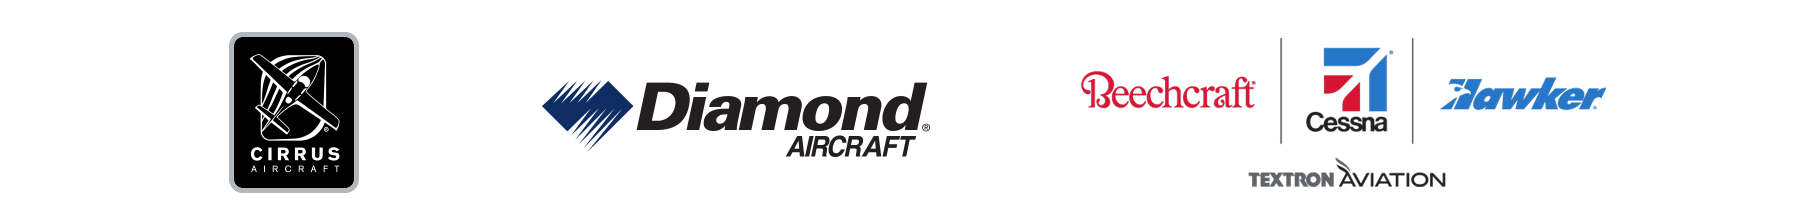 OEM Partners Cirrus Aircraft, Diamond Aircraft and Textron Aviation